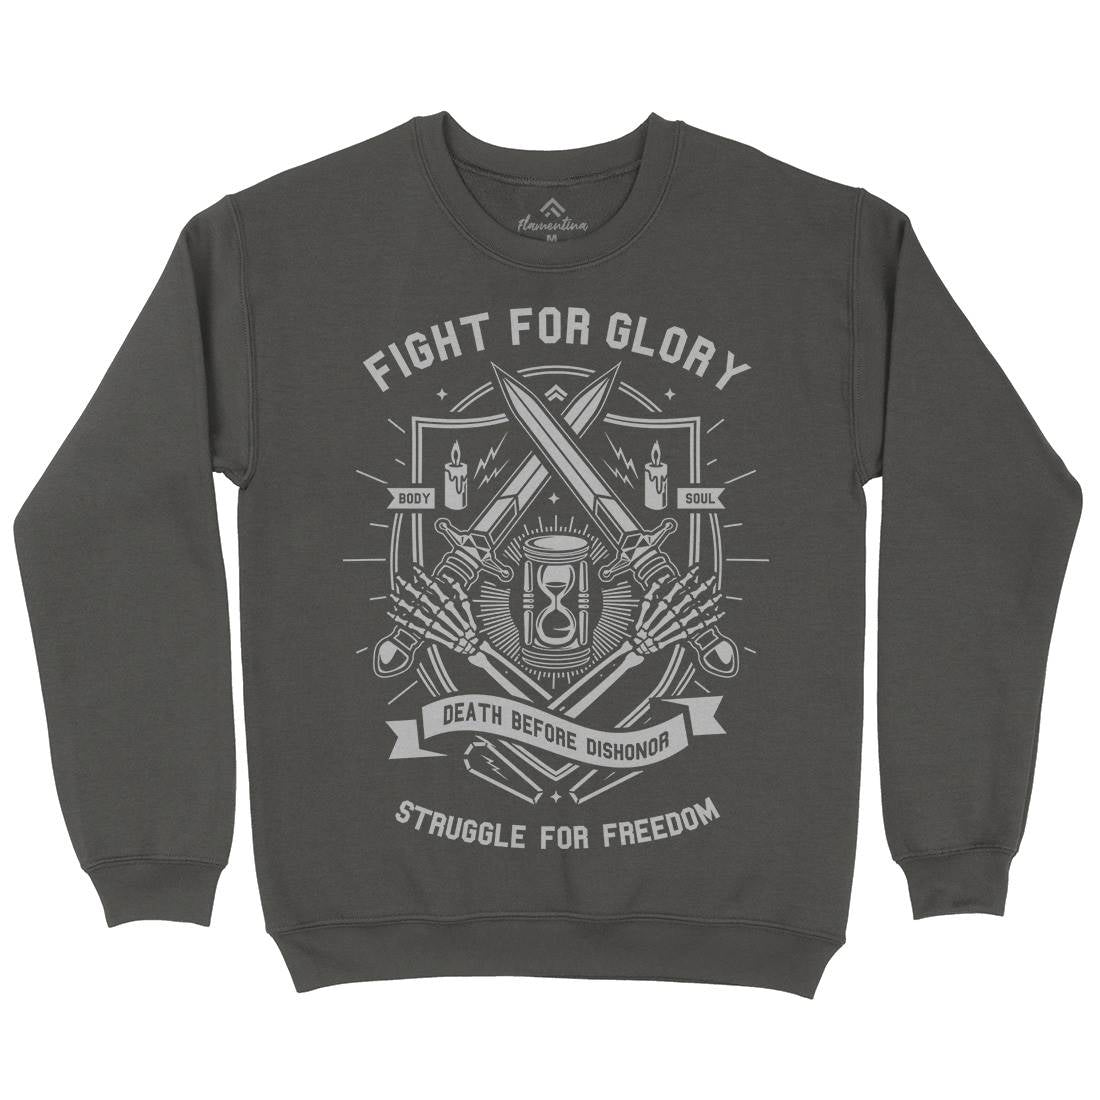 Fight For Glory Kids Crew Neck Sweatshirt Army A228